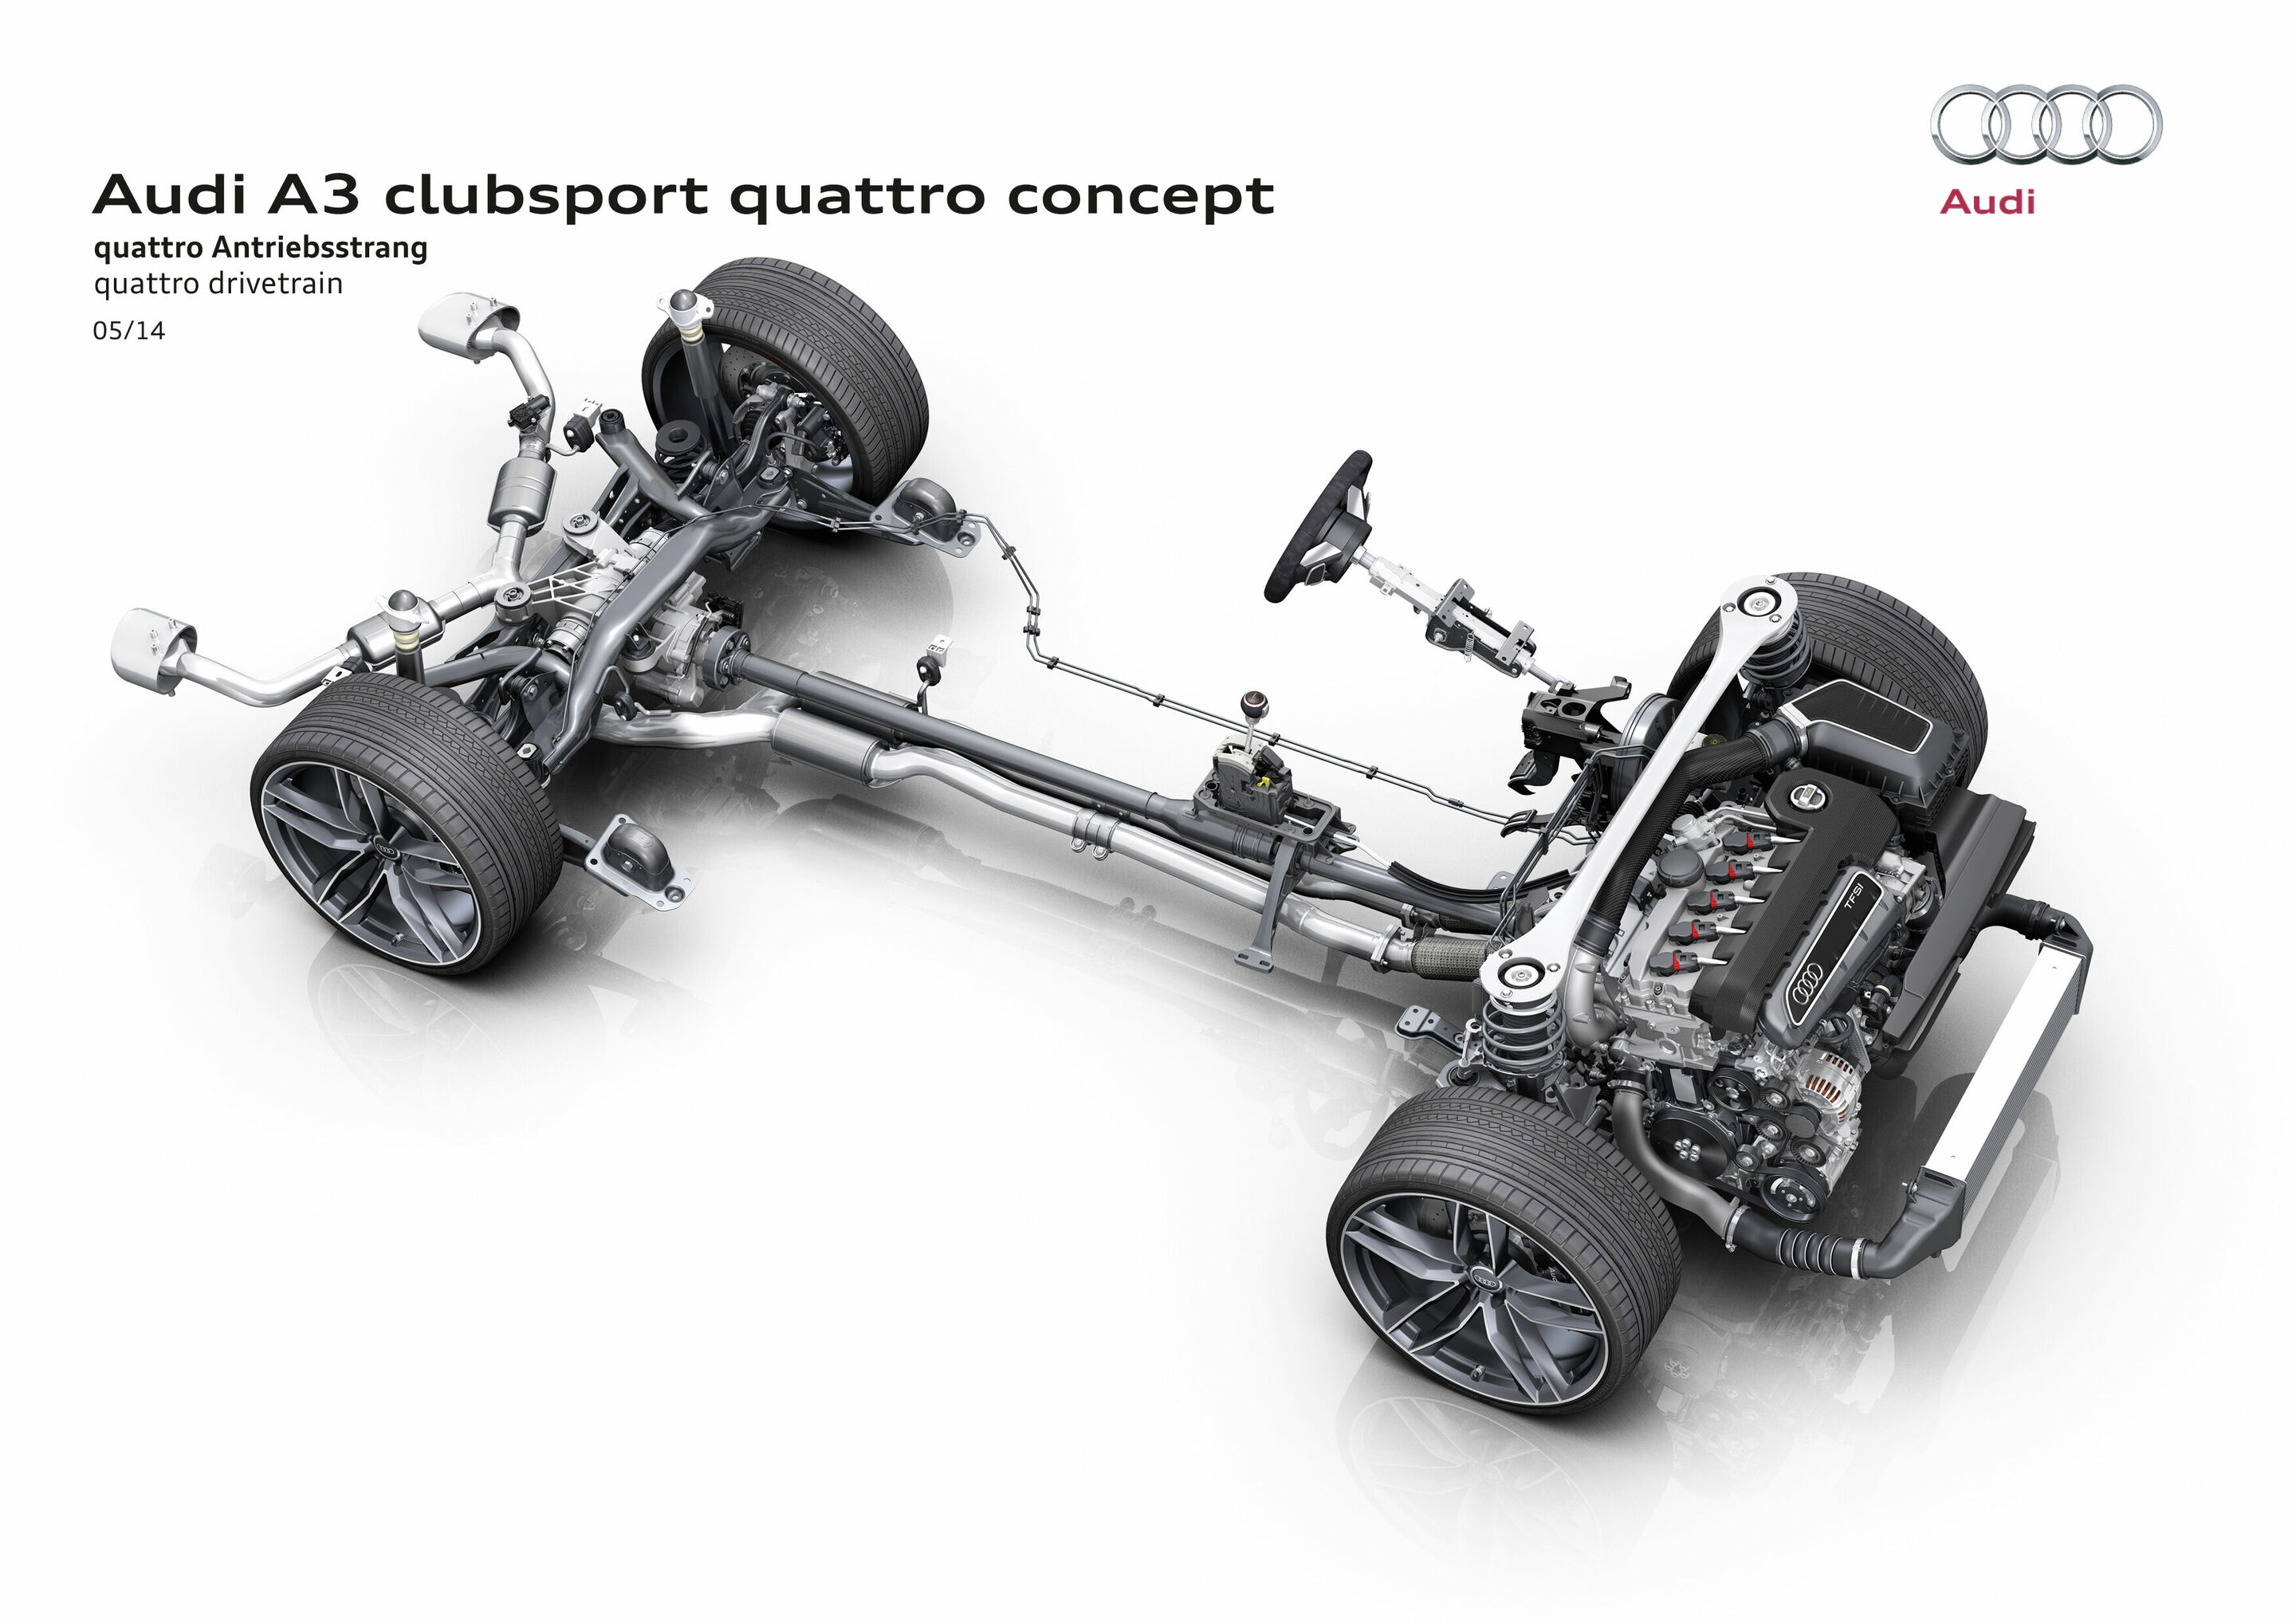 Audi A3 clubsport quattro concept